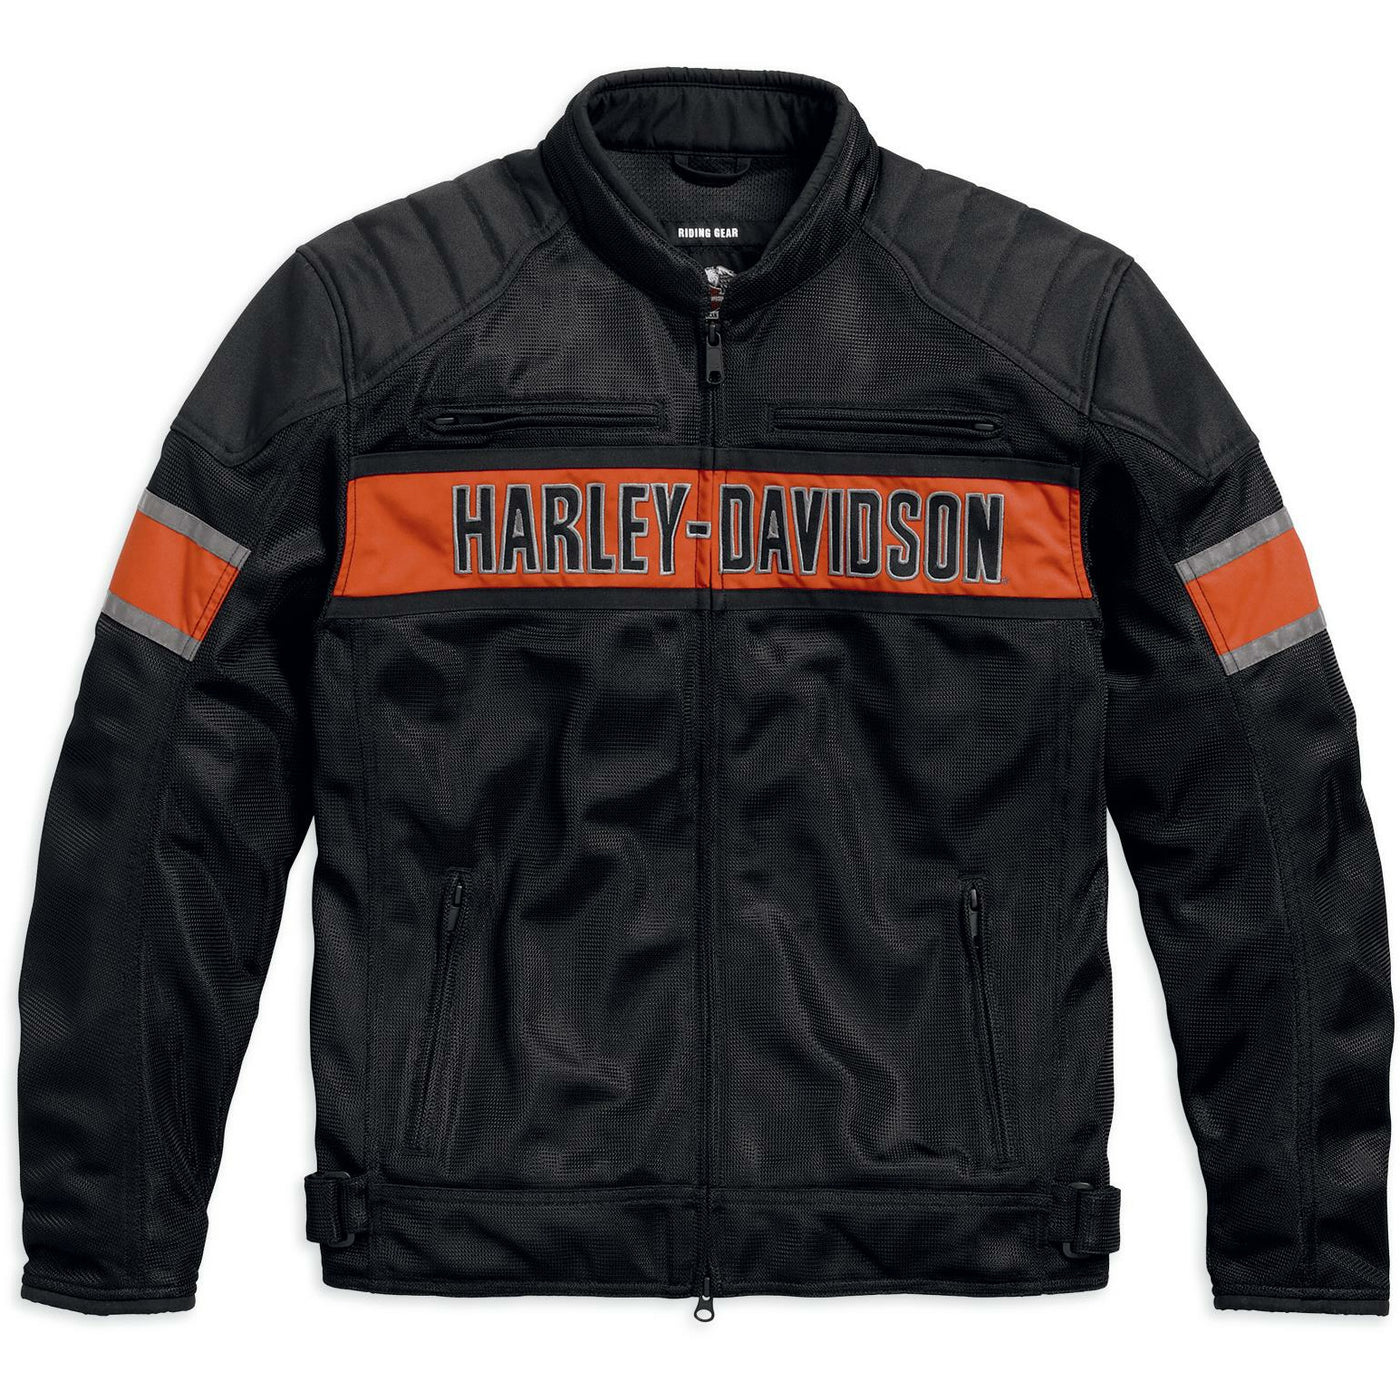 Harley-Davidson® Men's Trenton Mesh Riding Jacket // 98111-16VM